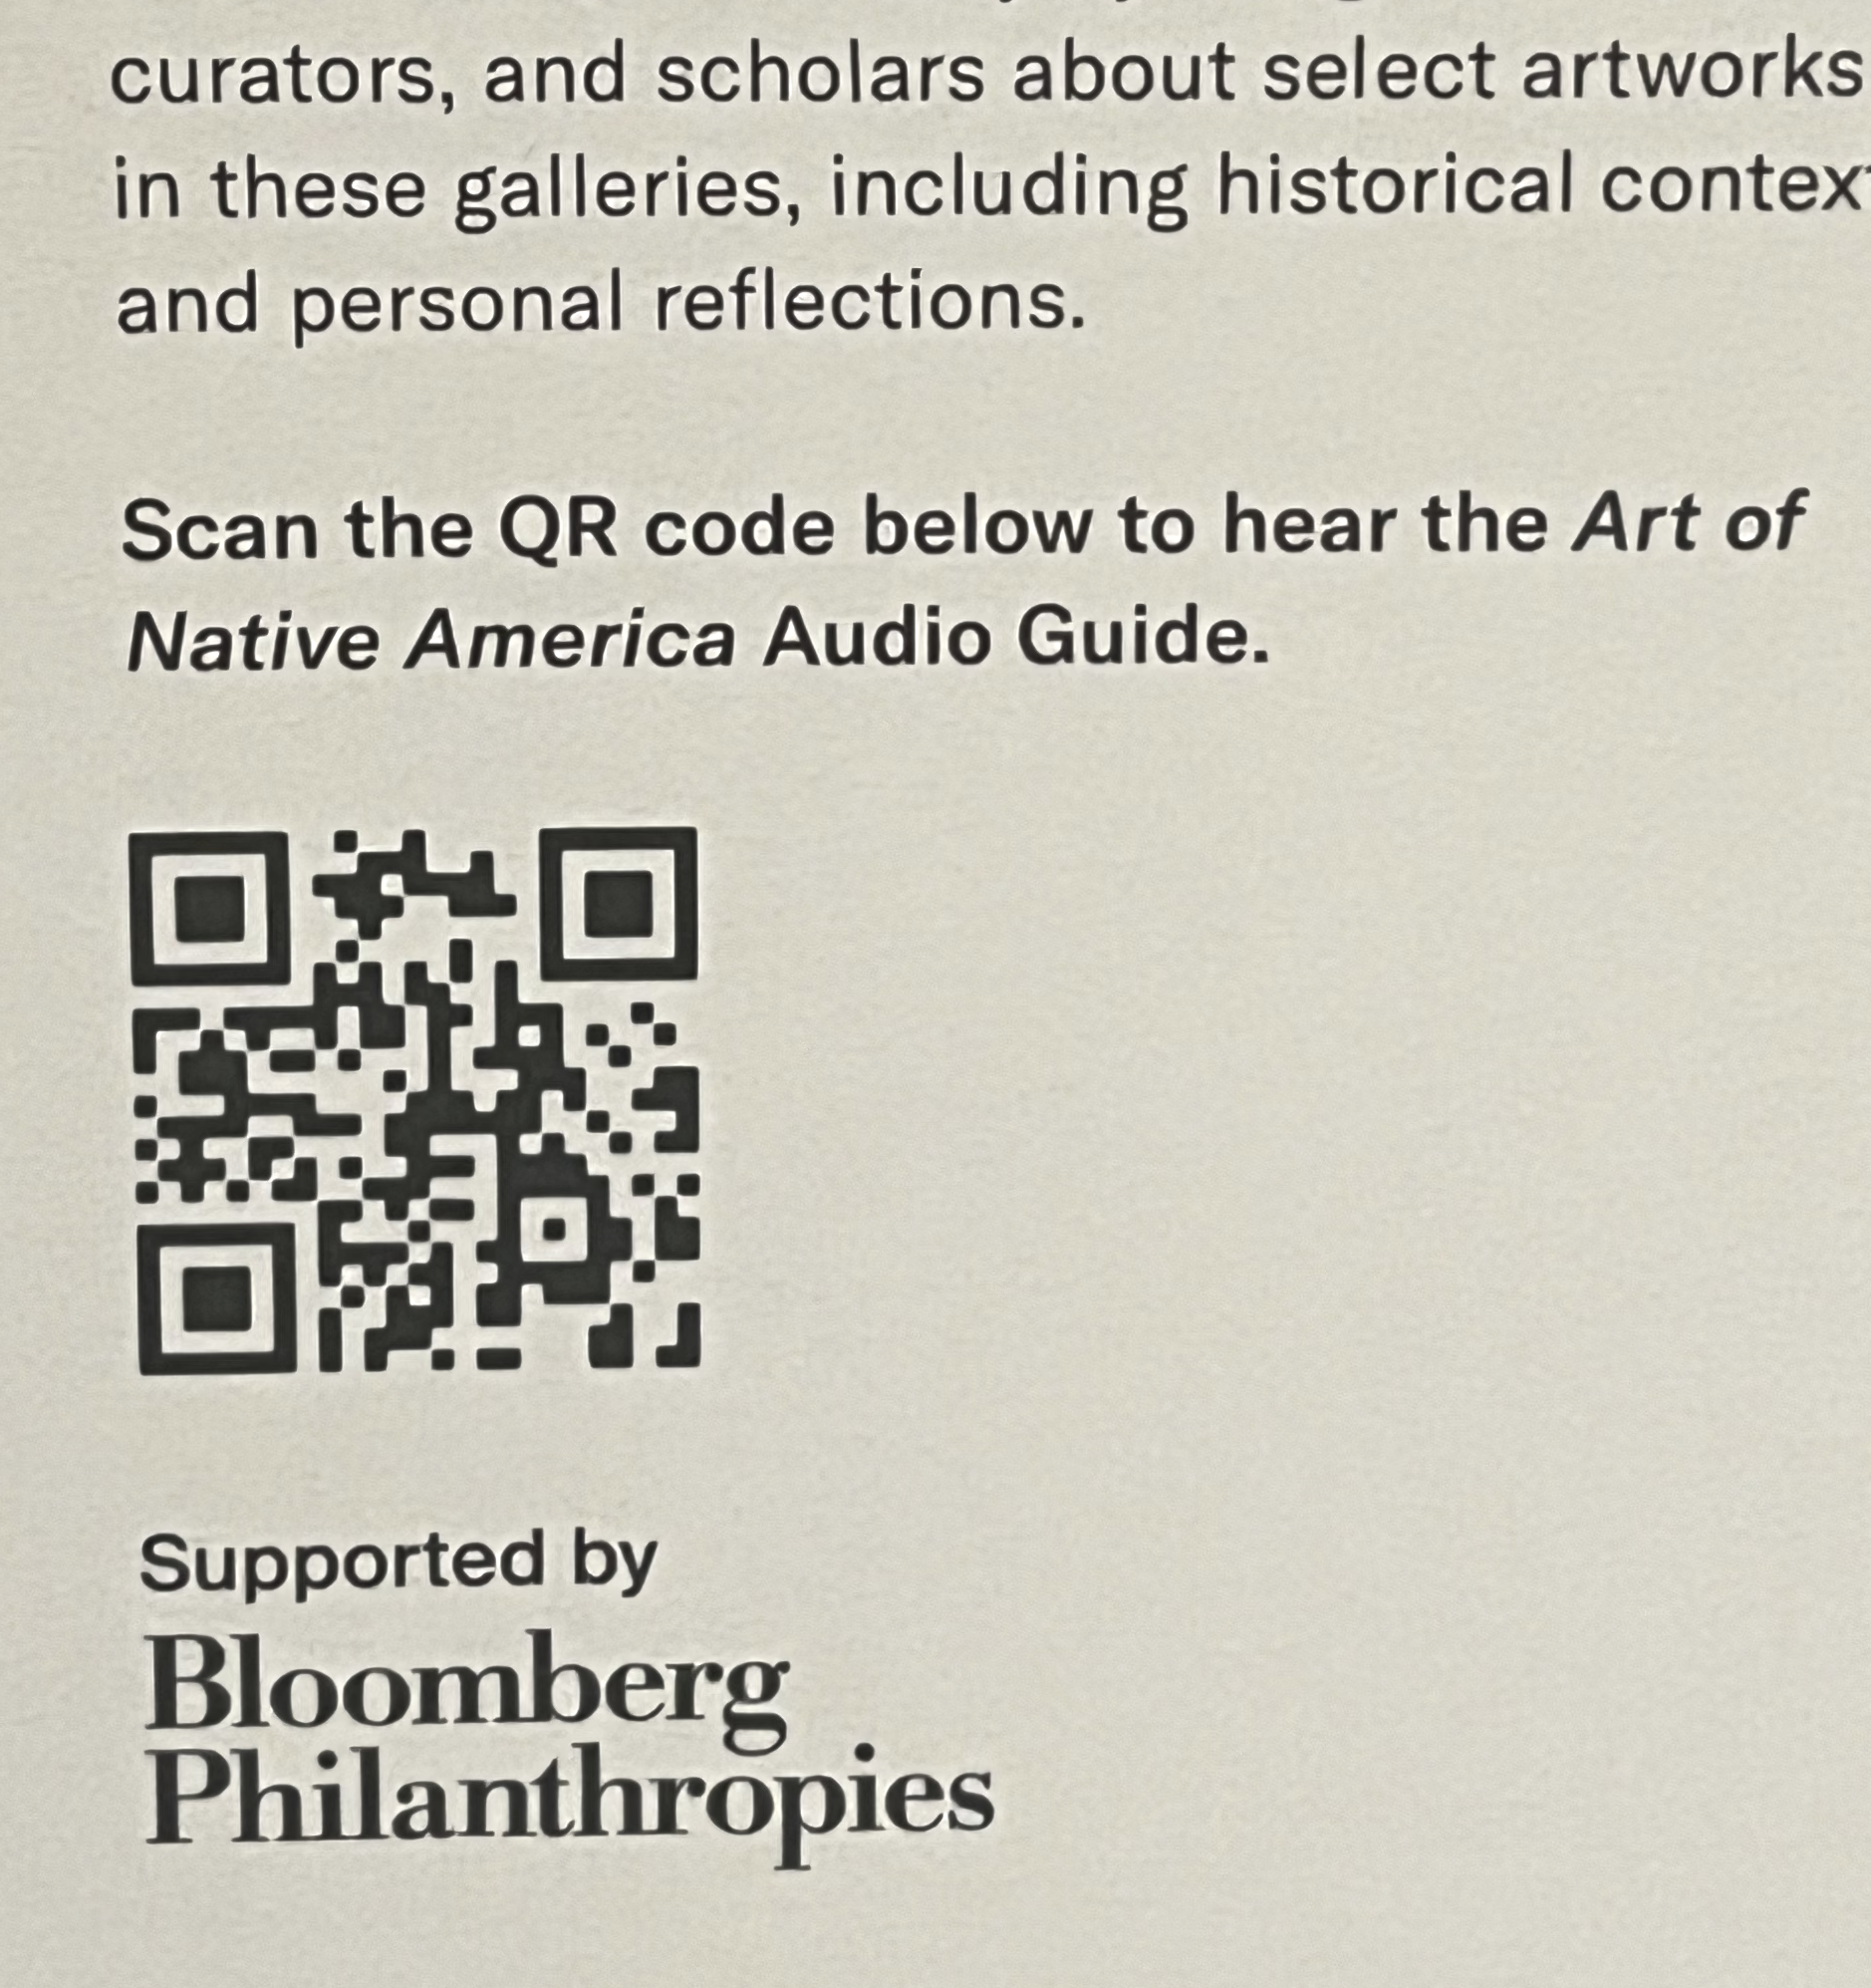 A QR code sponsored by Bloomberg philanthropies.